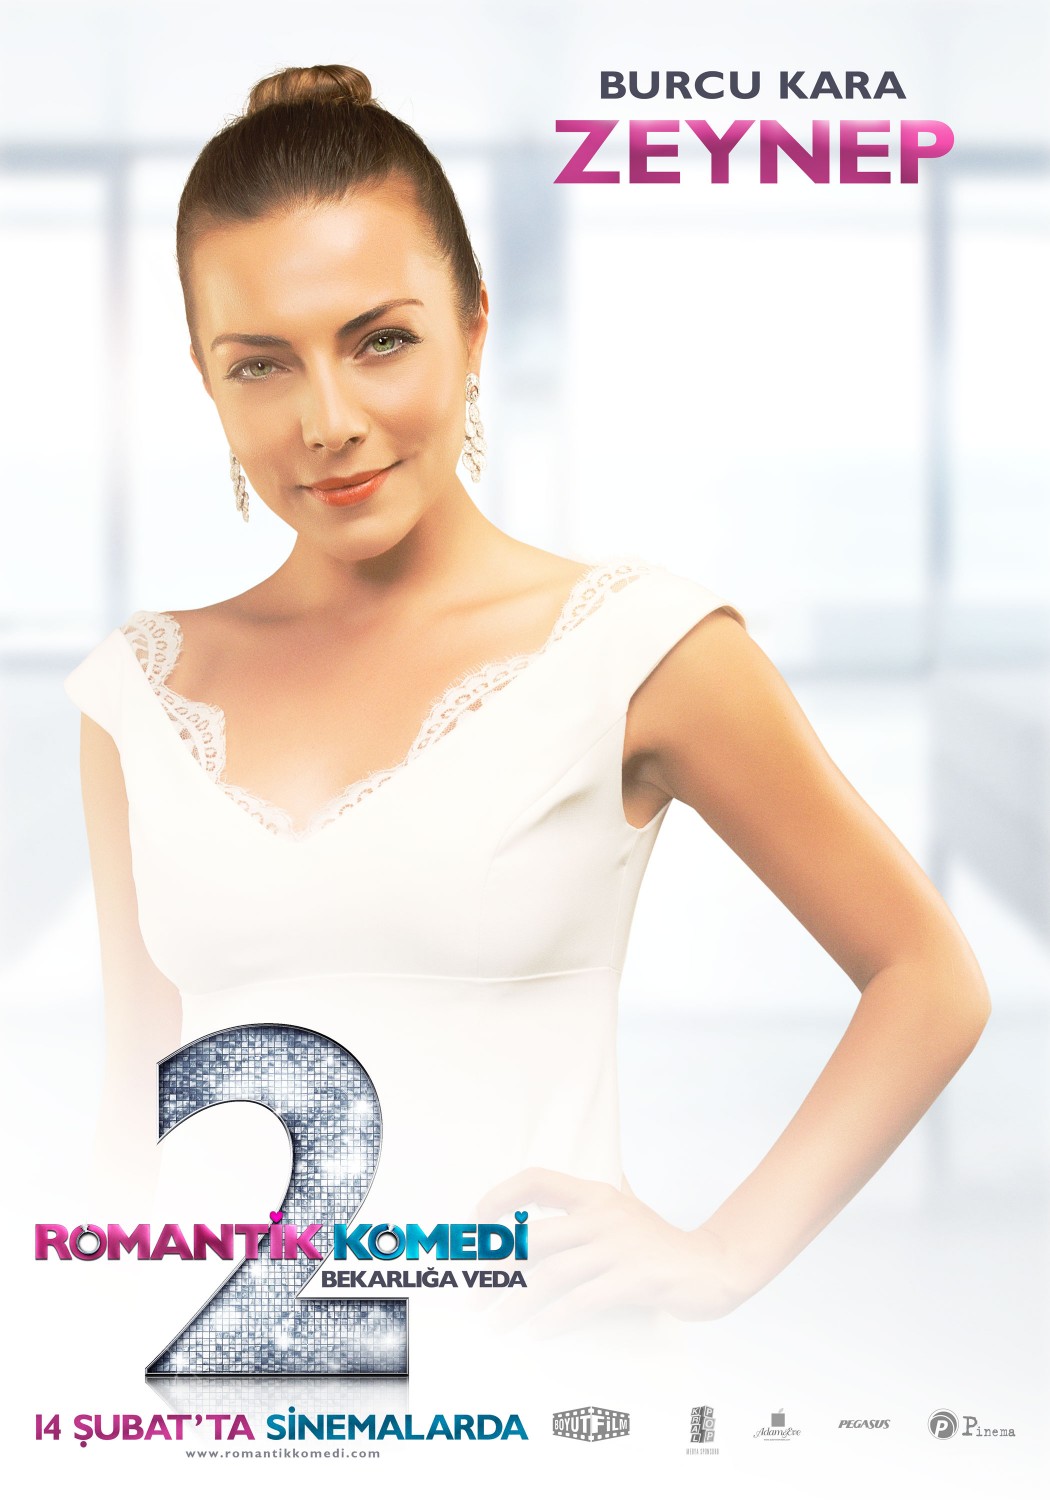 Extra Large Movie Poster Image for Romantik komedi 2: Bekarliga veda (#9 of 9)